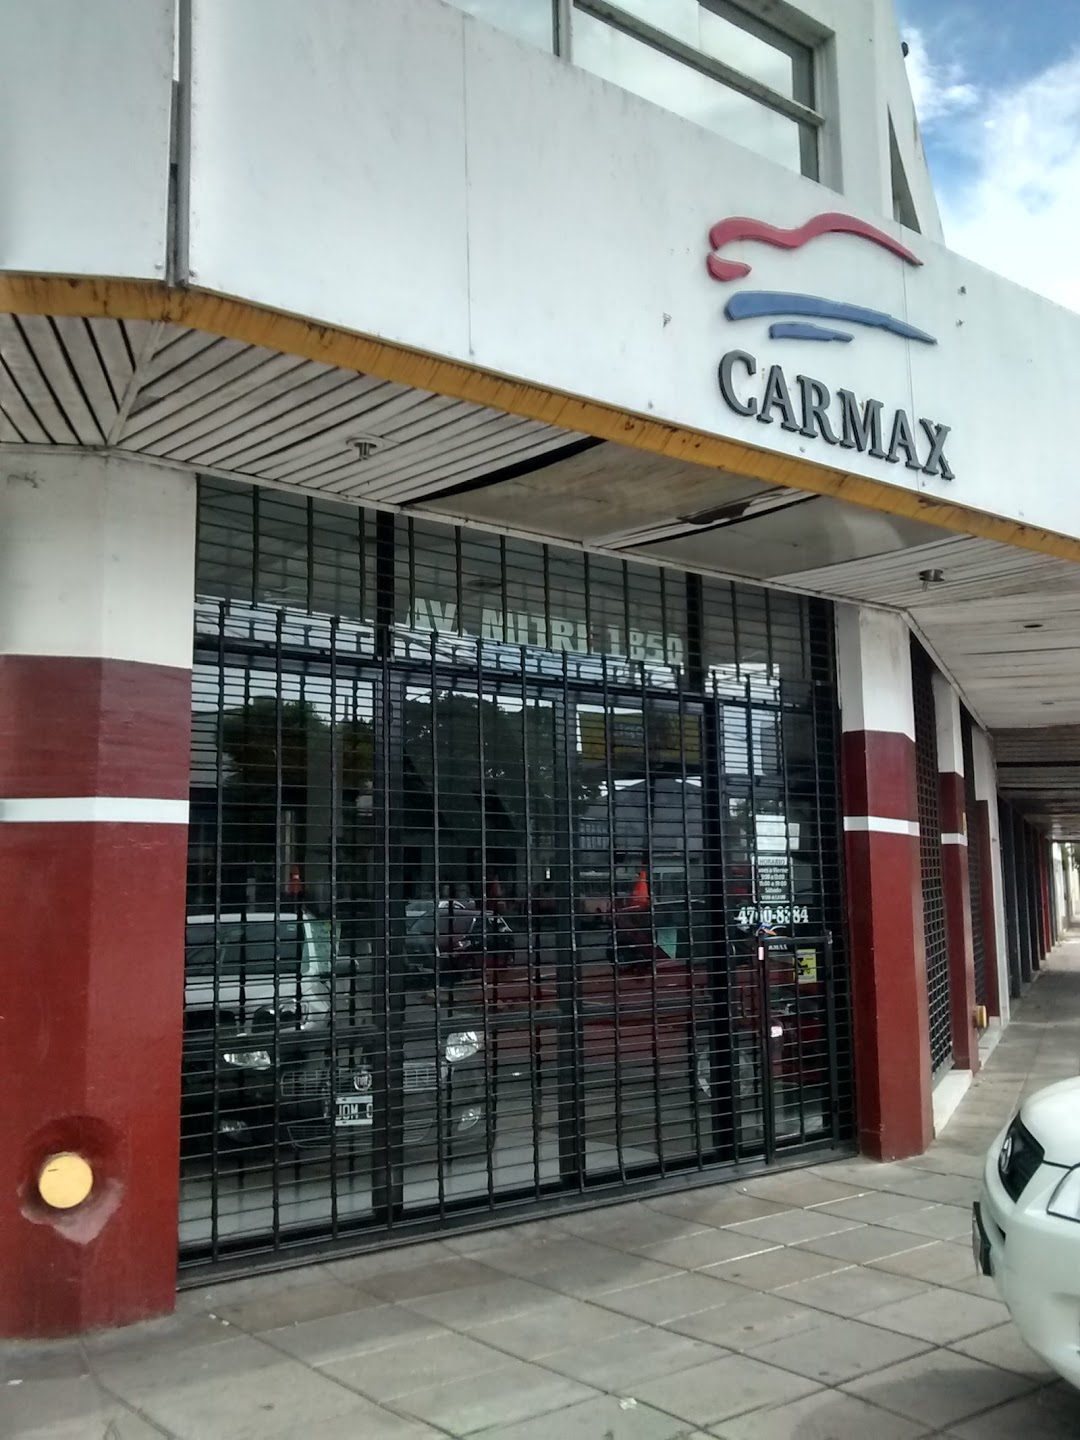 Carmax